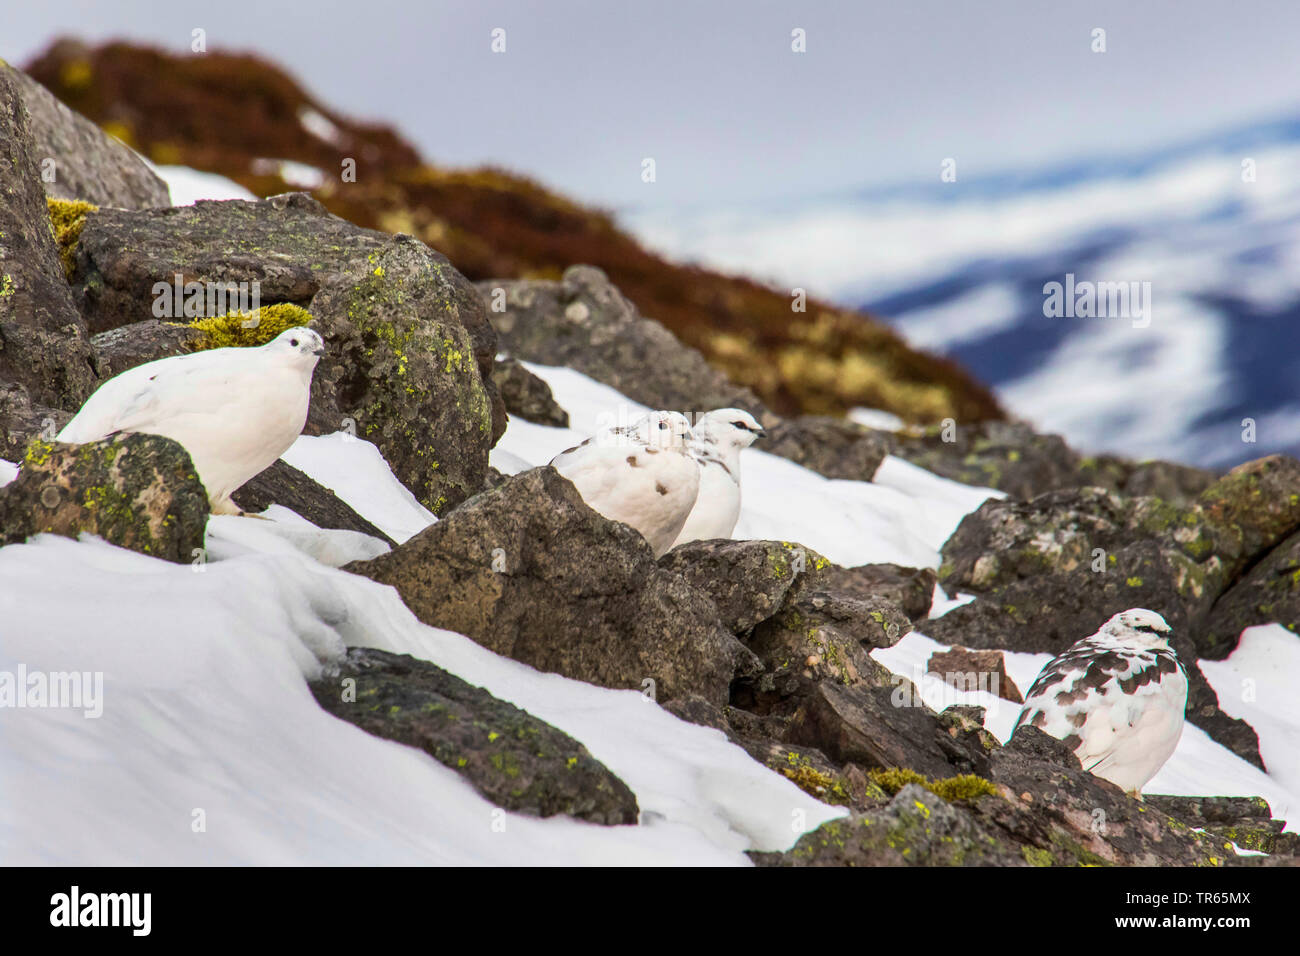 Rock ptarmigan, Snow chicken (Lagopus mutus), four rock ptarmigans sitting between rocks in the snow, United Kingdom, Scotland, Cairngorms National Park, Aviemore Stock Photo